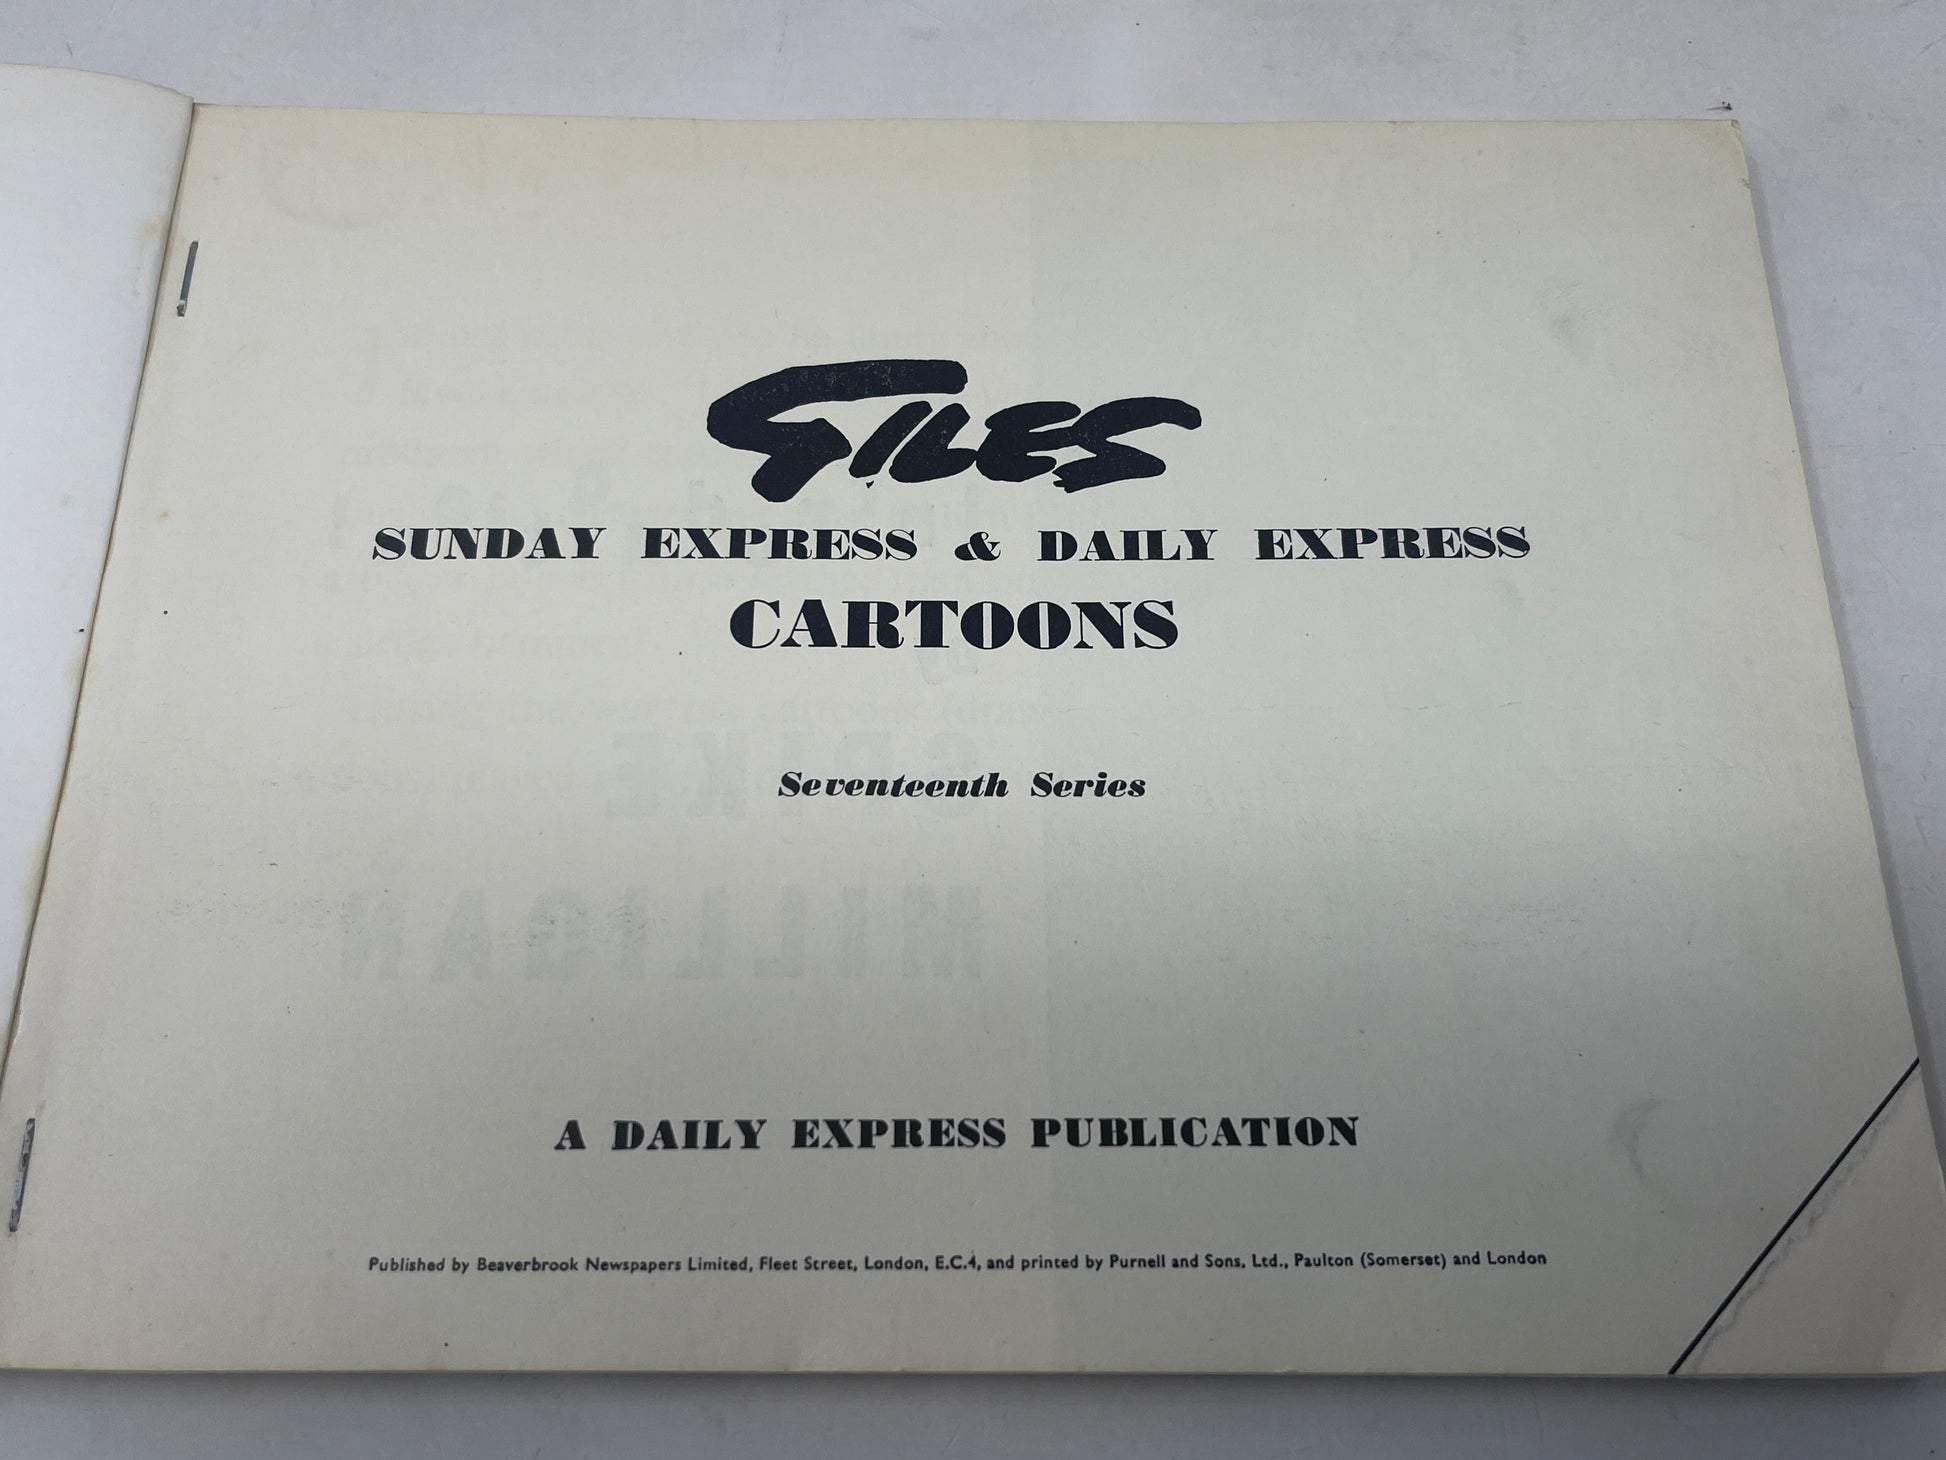 GILES Daily Express and Sunday Express Cartoons (17th Series)